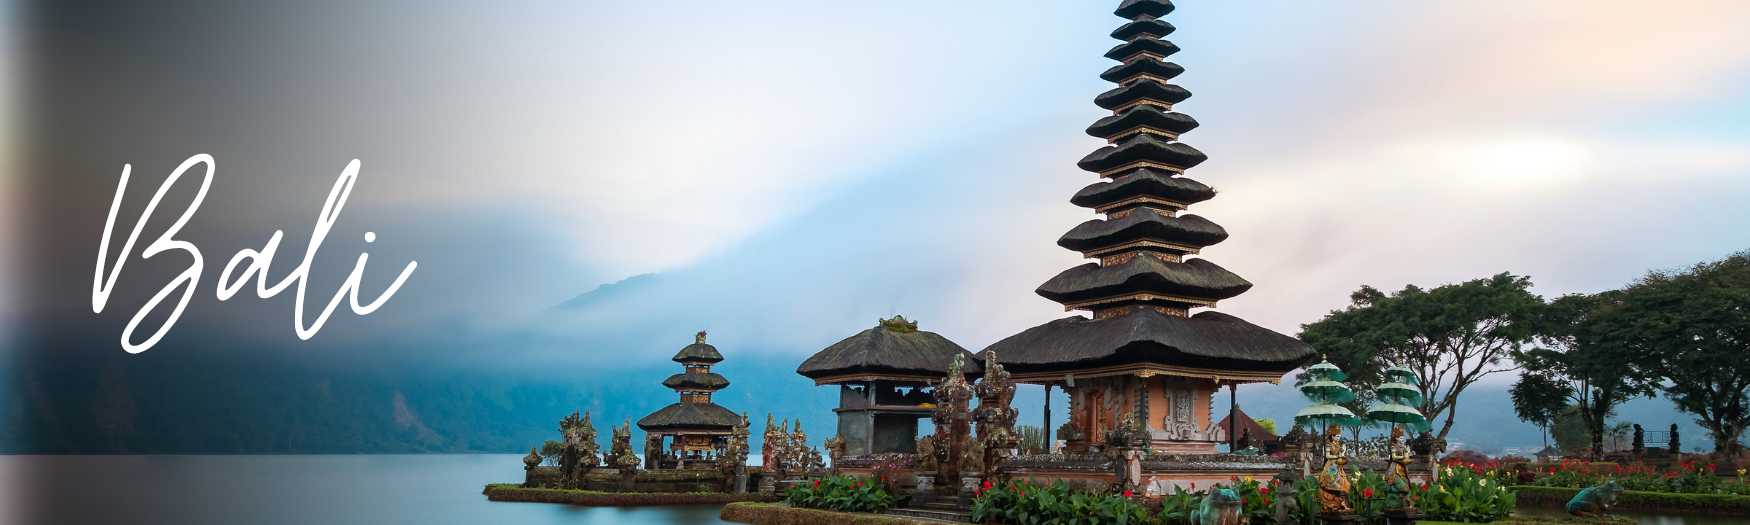 Bali Banner Image